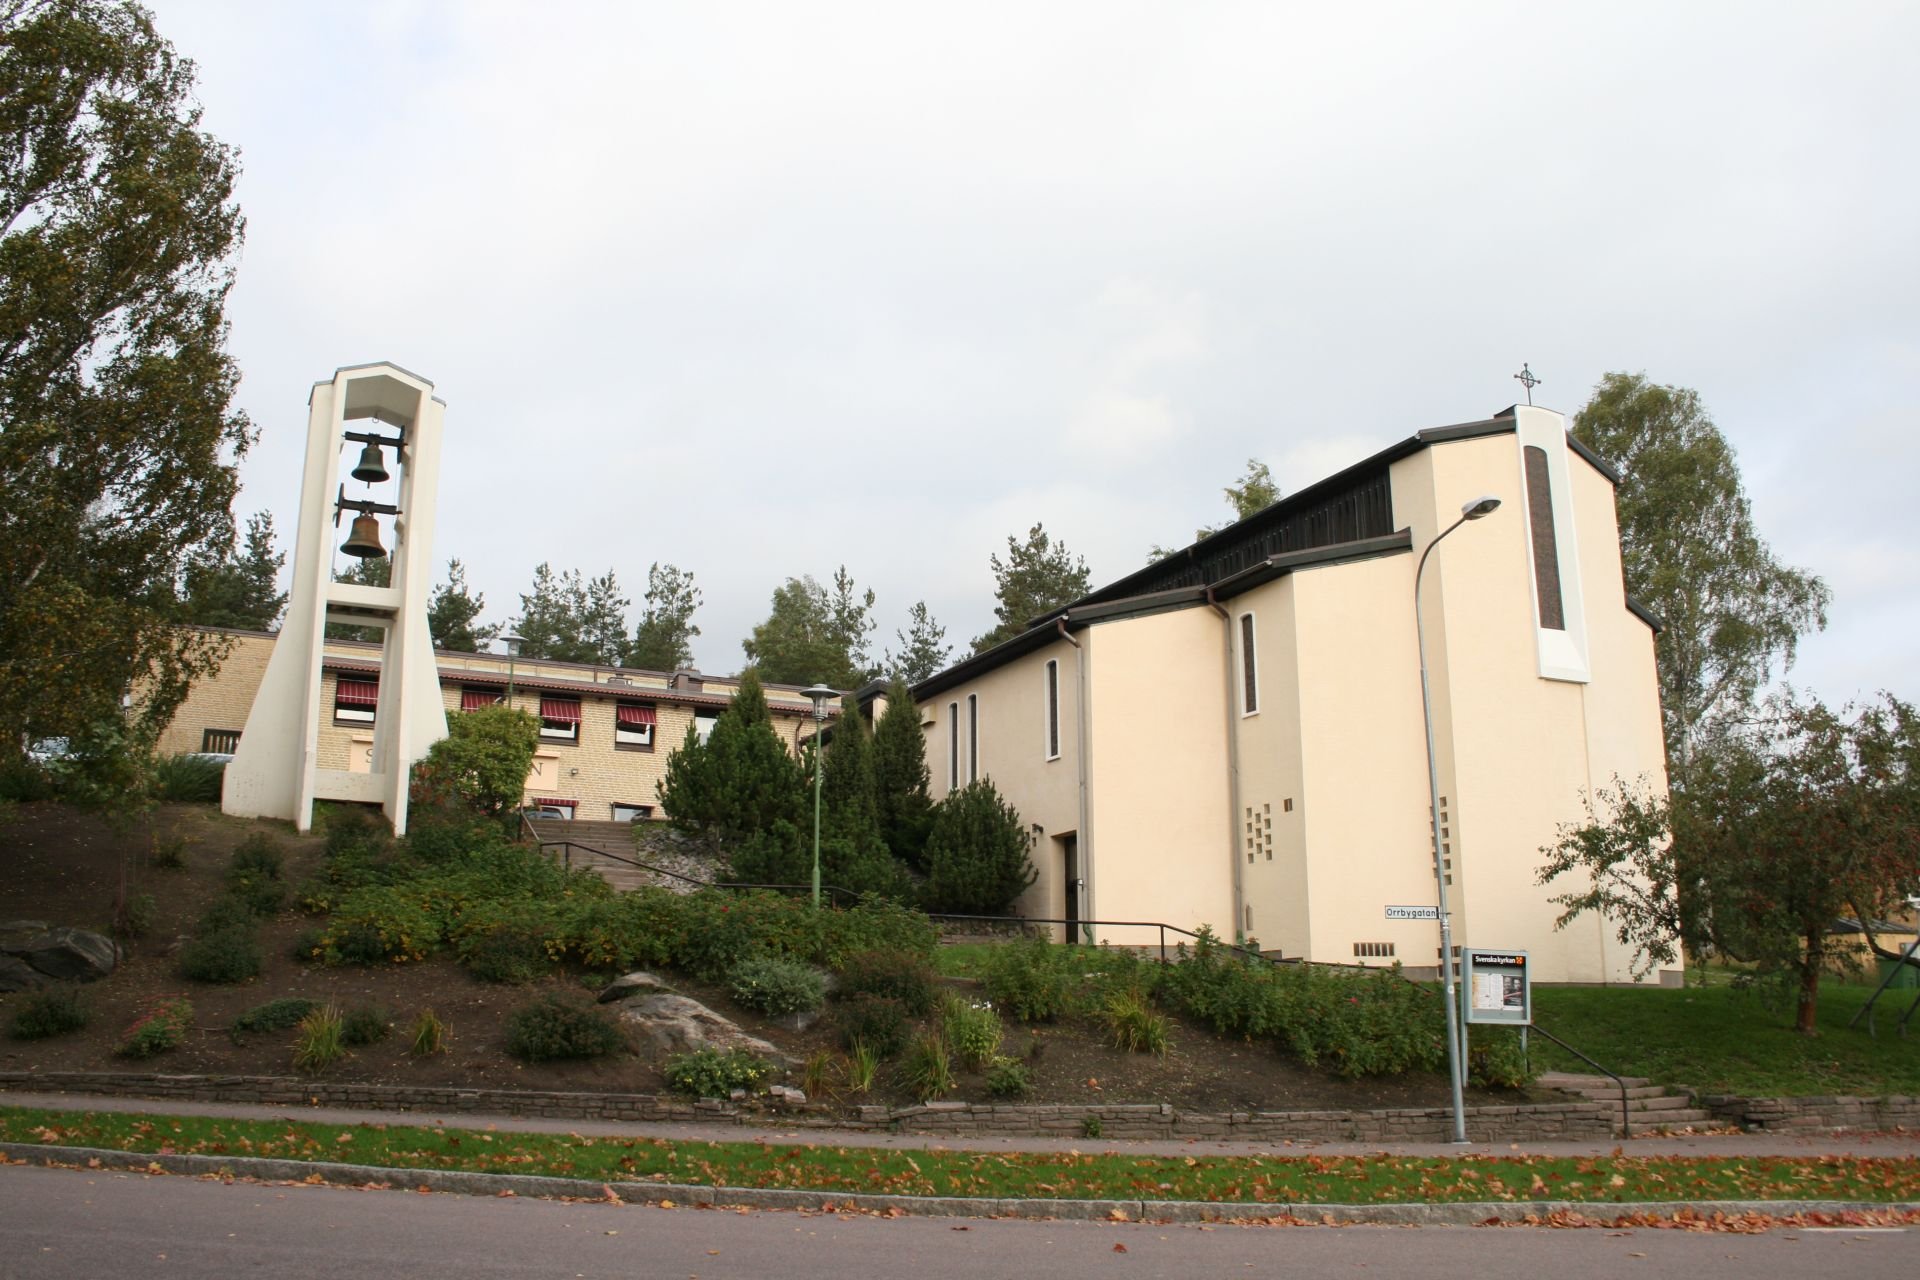 Solberg Church